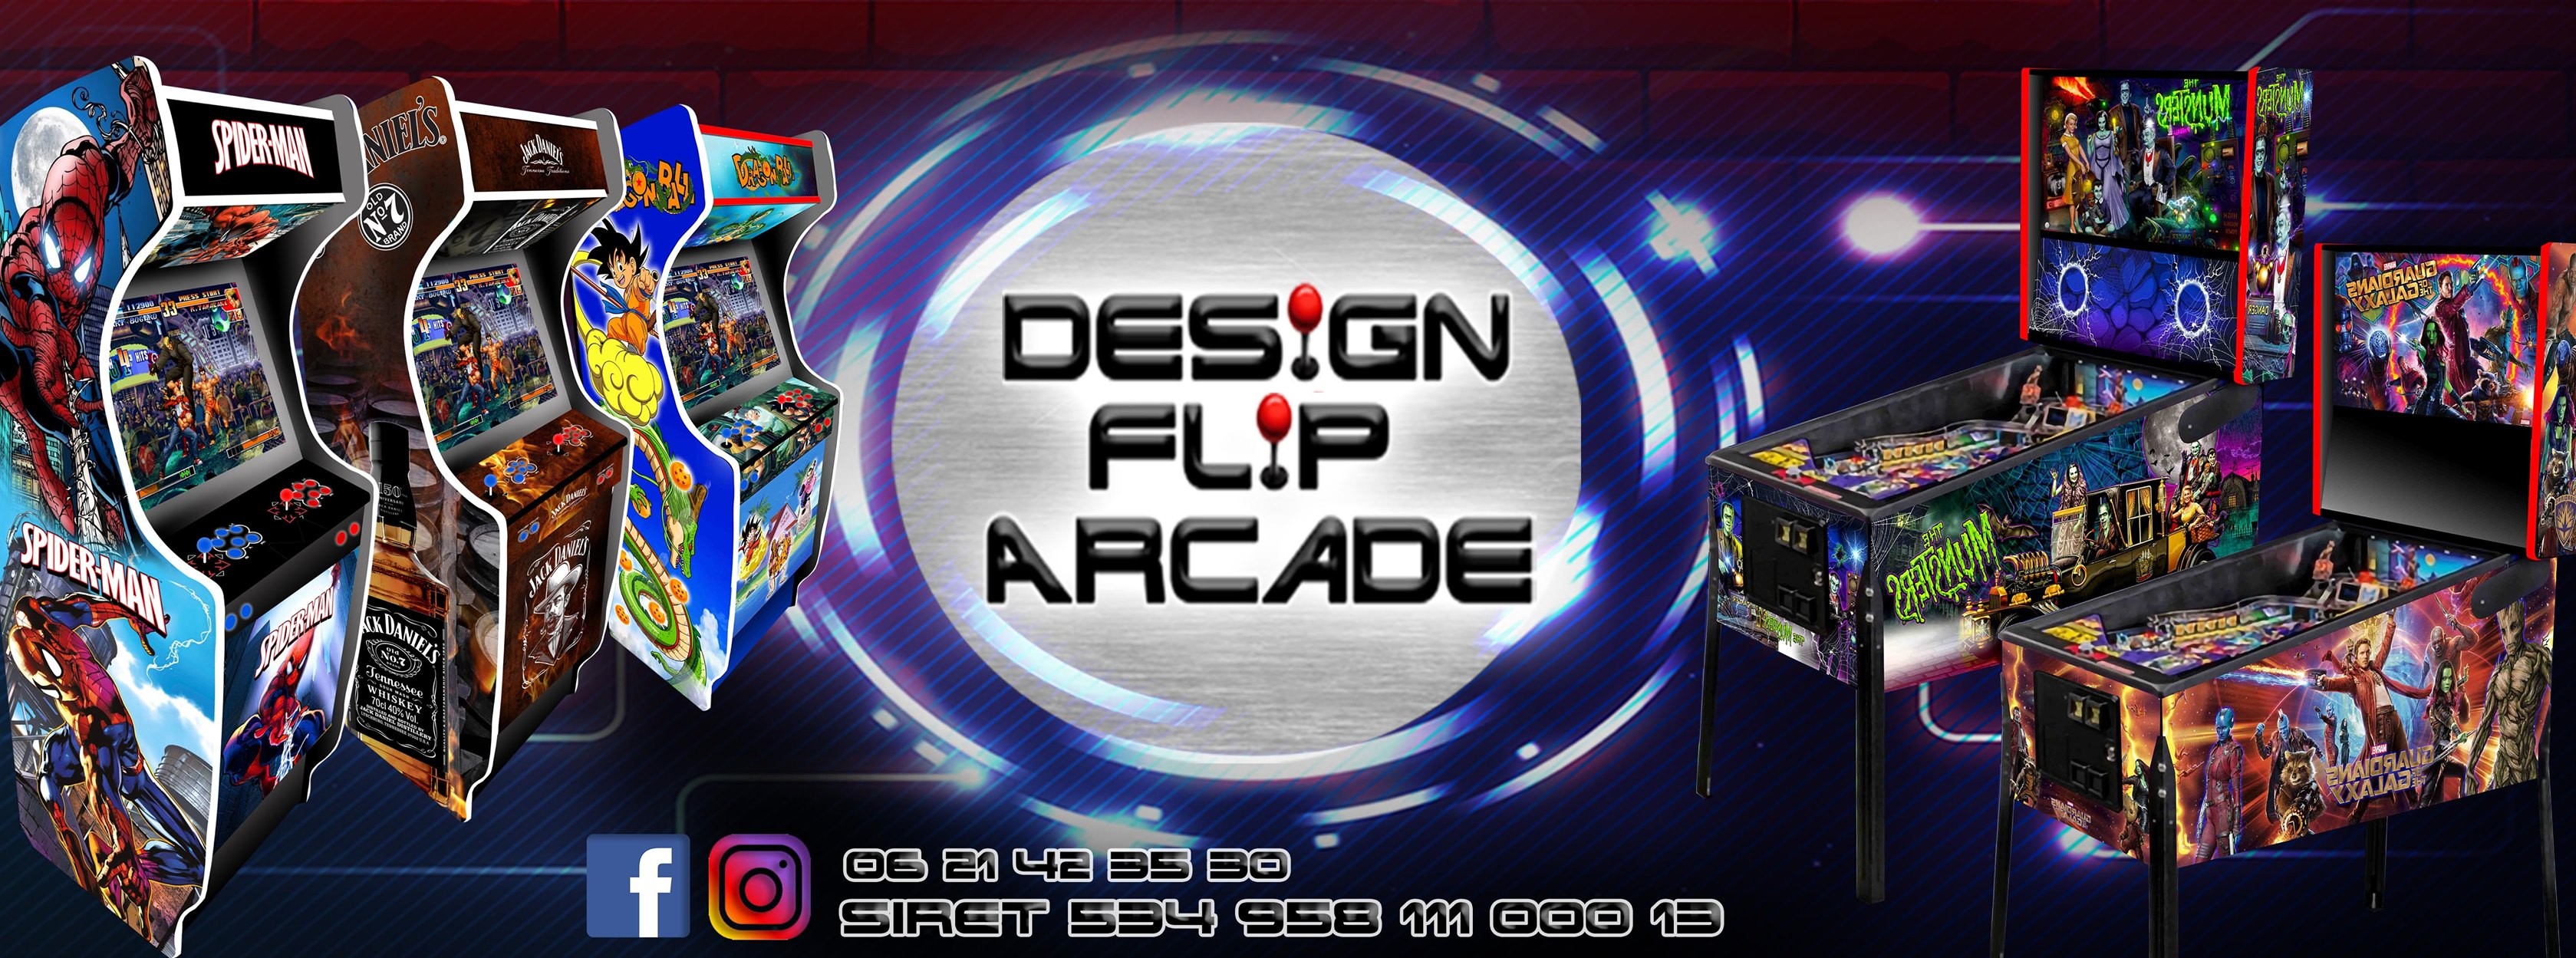 Design Flip Arcade